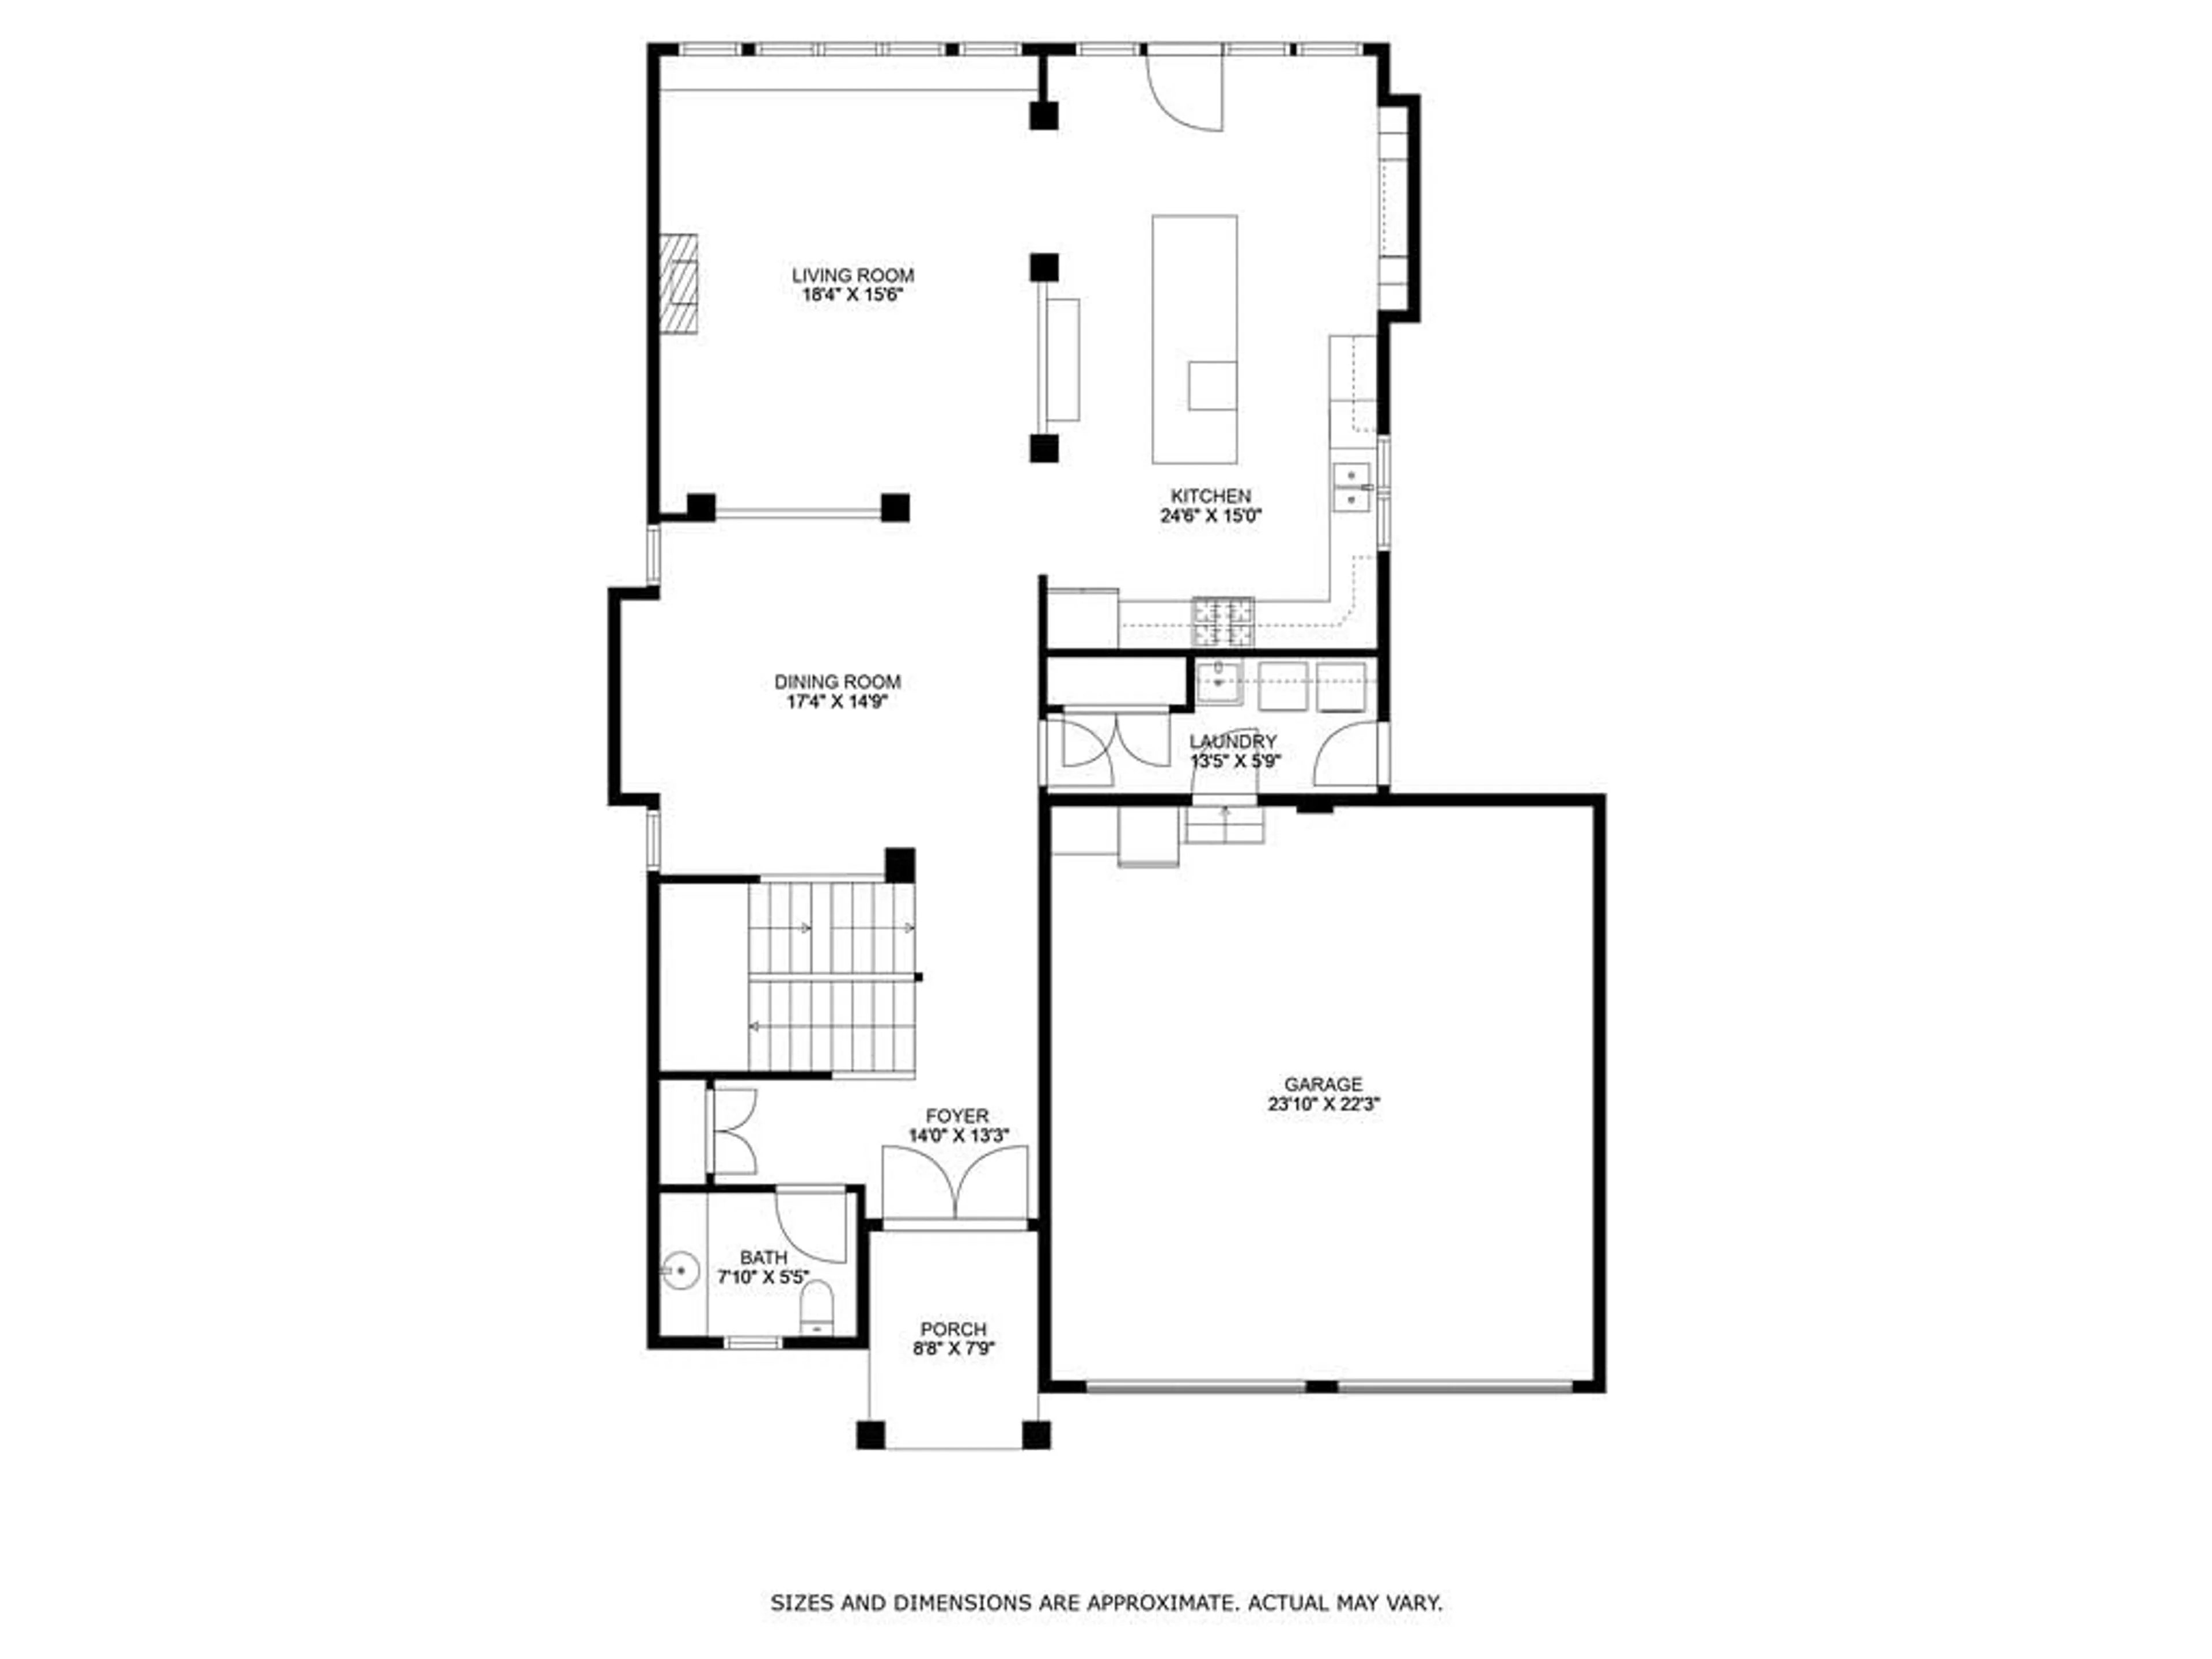 Floor plan for 41 Kingsview Dr, Stoney Creek Ontario L8J 3X6